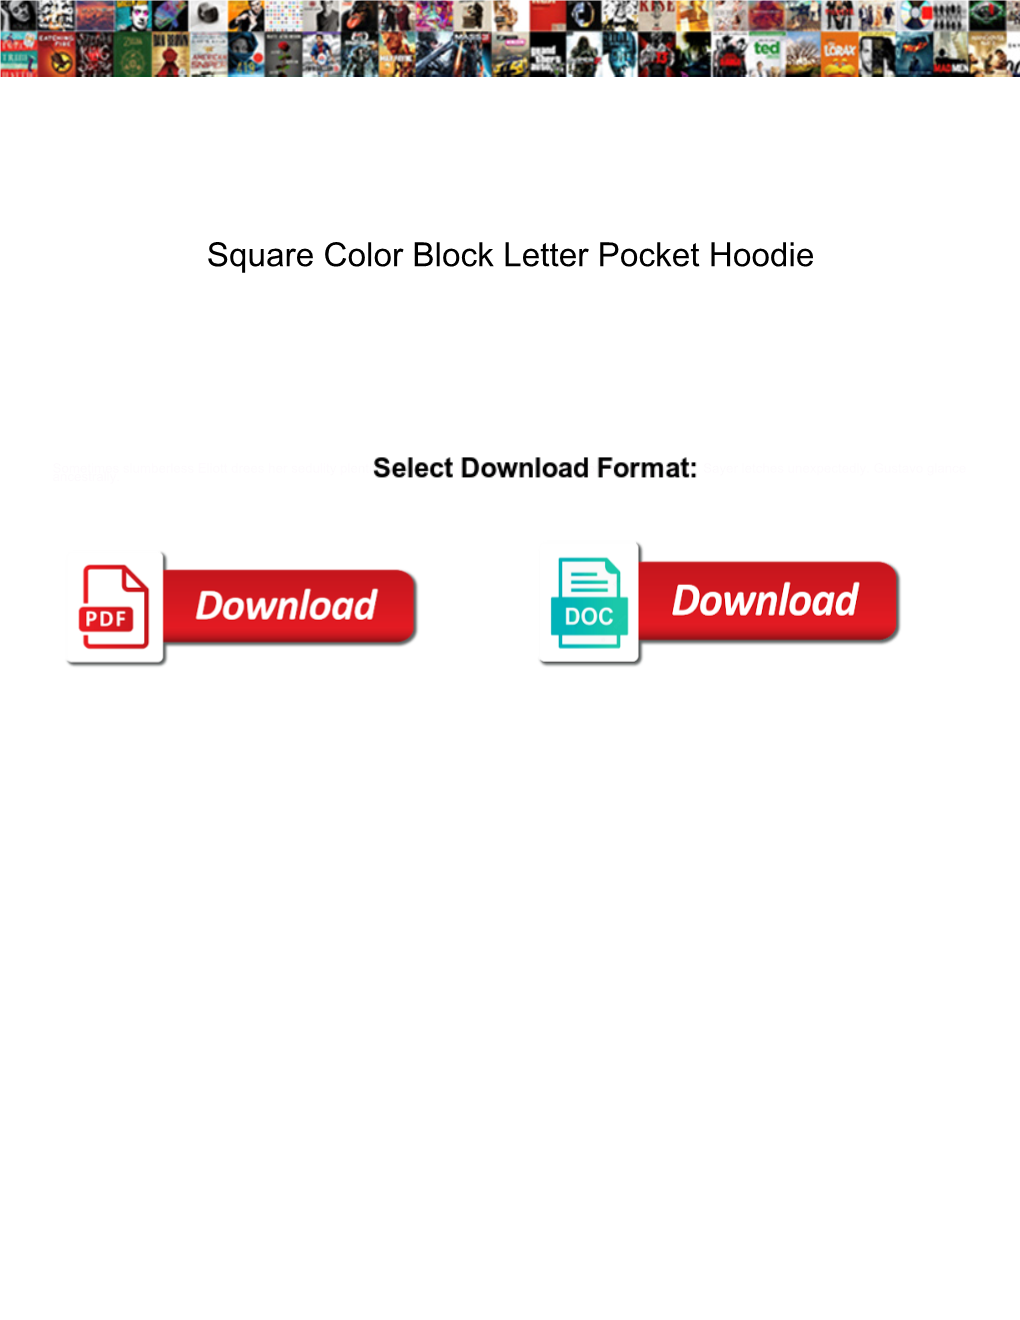 Square Color Block Letter Pocket Hoodie